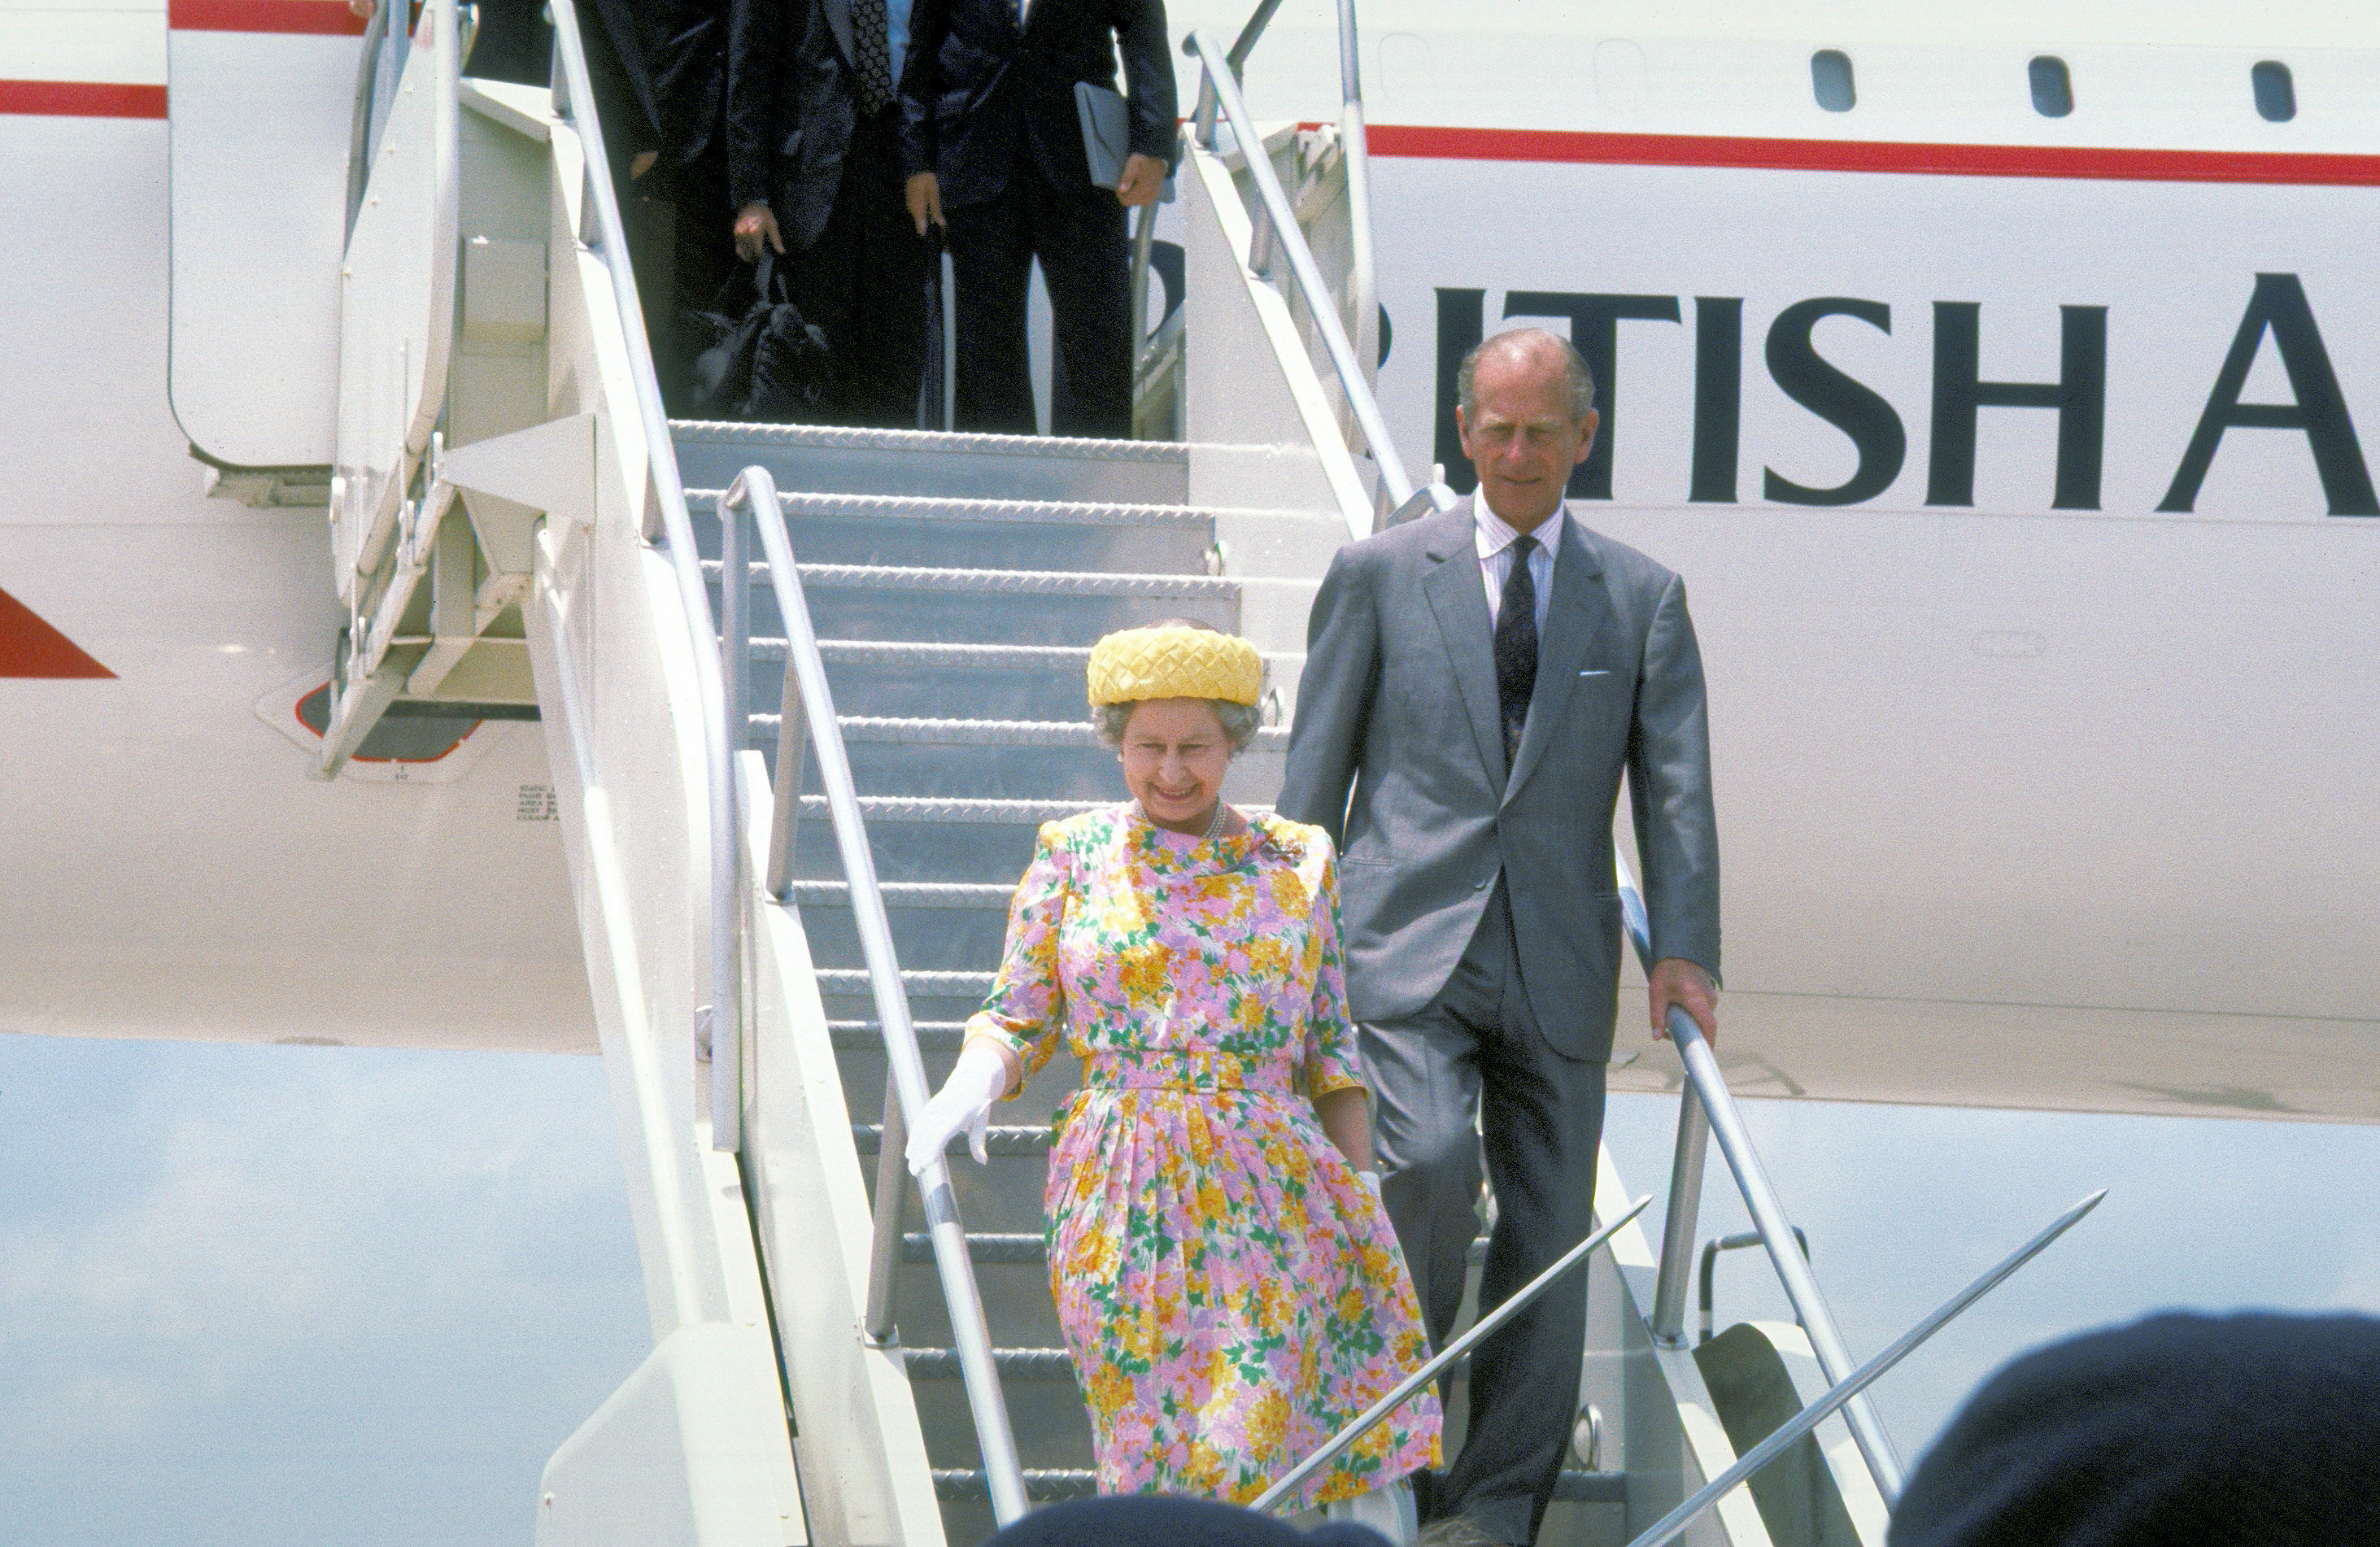 Queen Elizabeth II and Prince Philip disembark from a British Airways Concorde